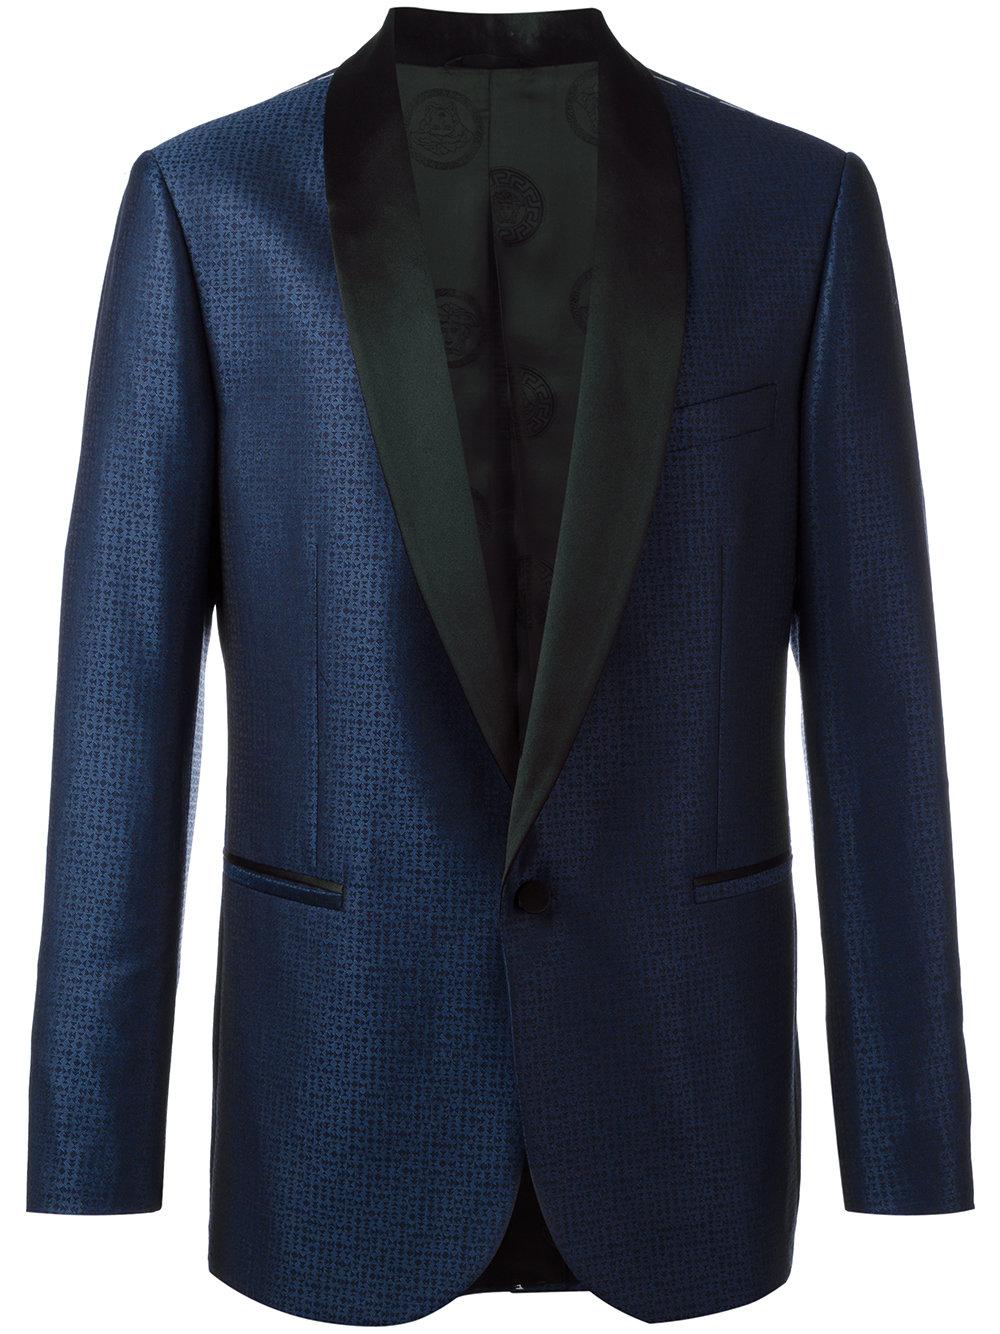 Versace Geometric Jacquard Tuxedo Jacket in Blue for Men - Lyst